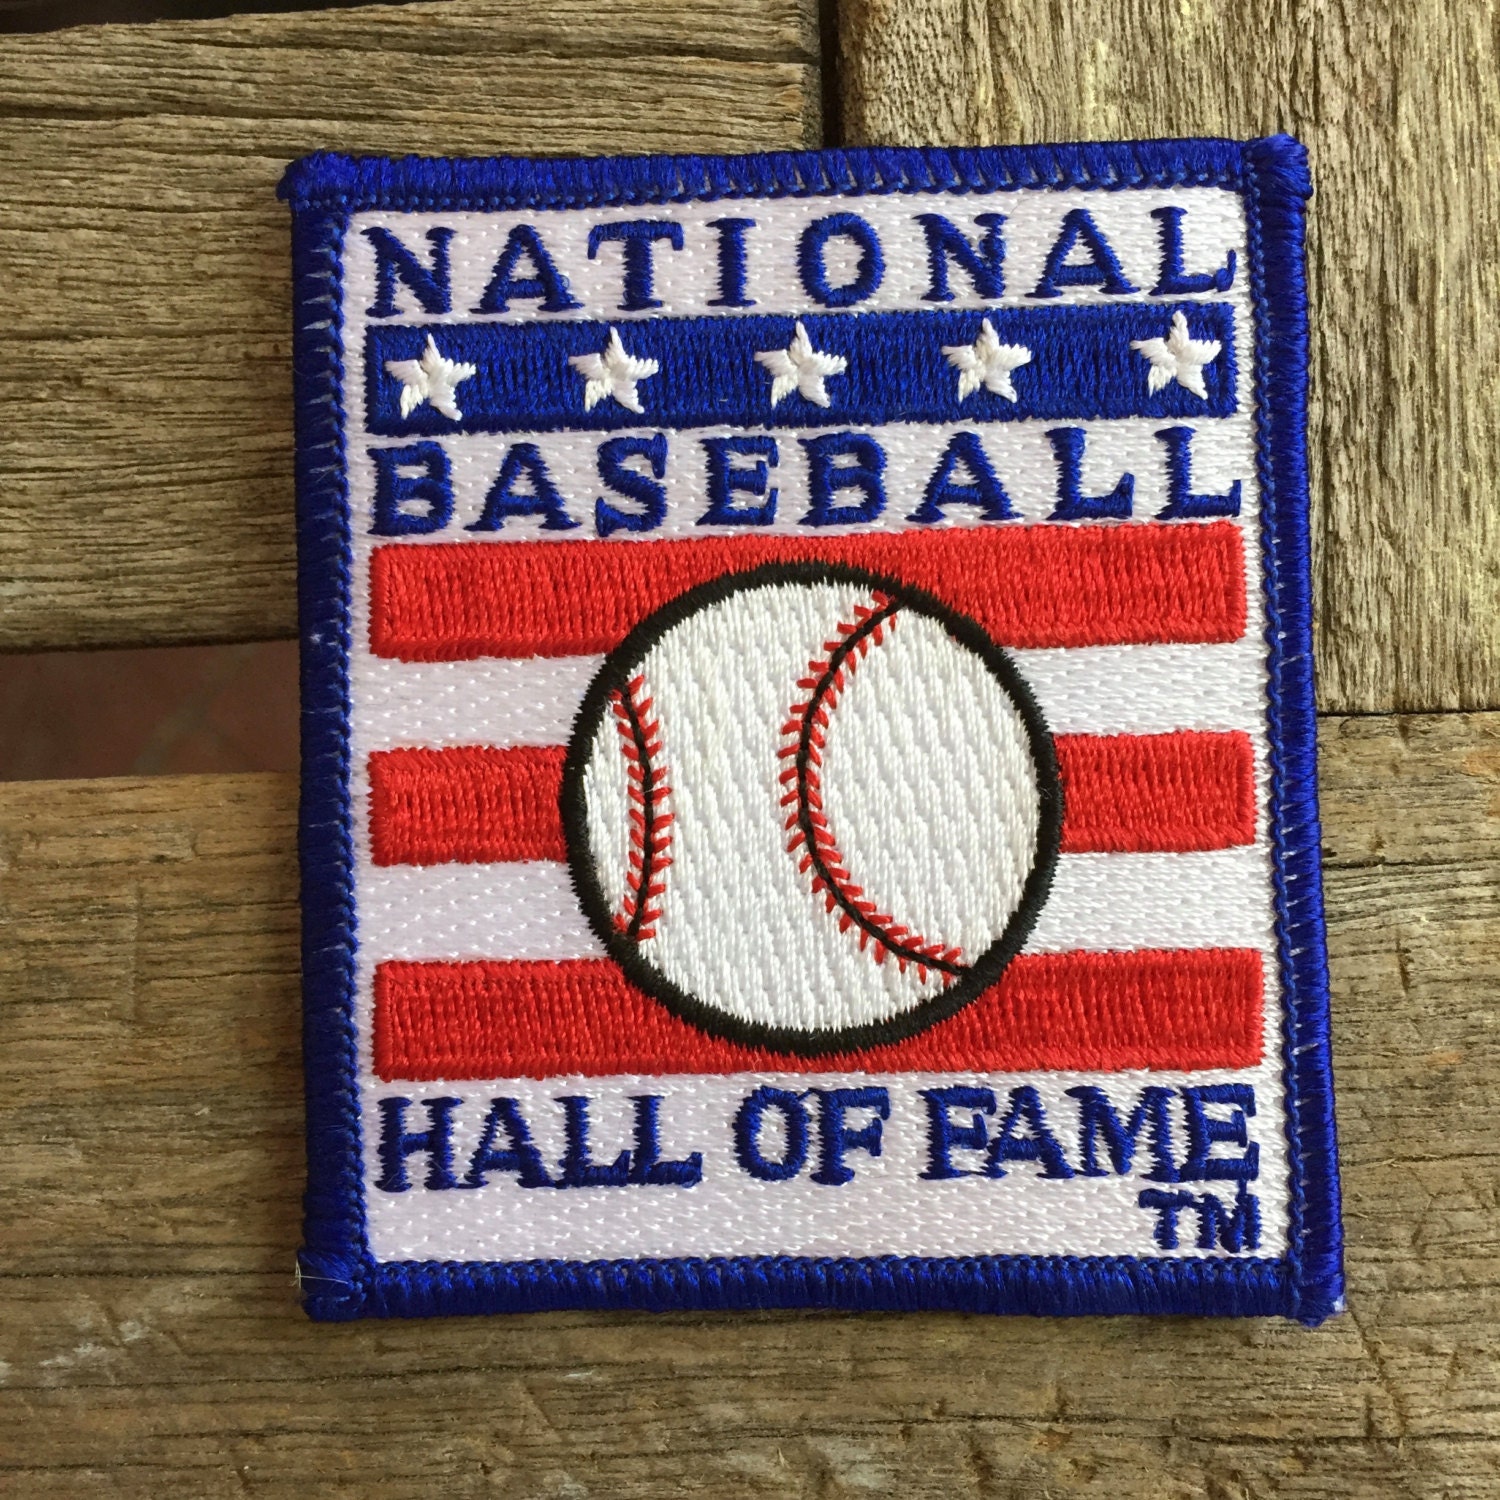 National Baseball Hall of Fame Souvenir Travel Patch